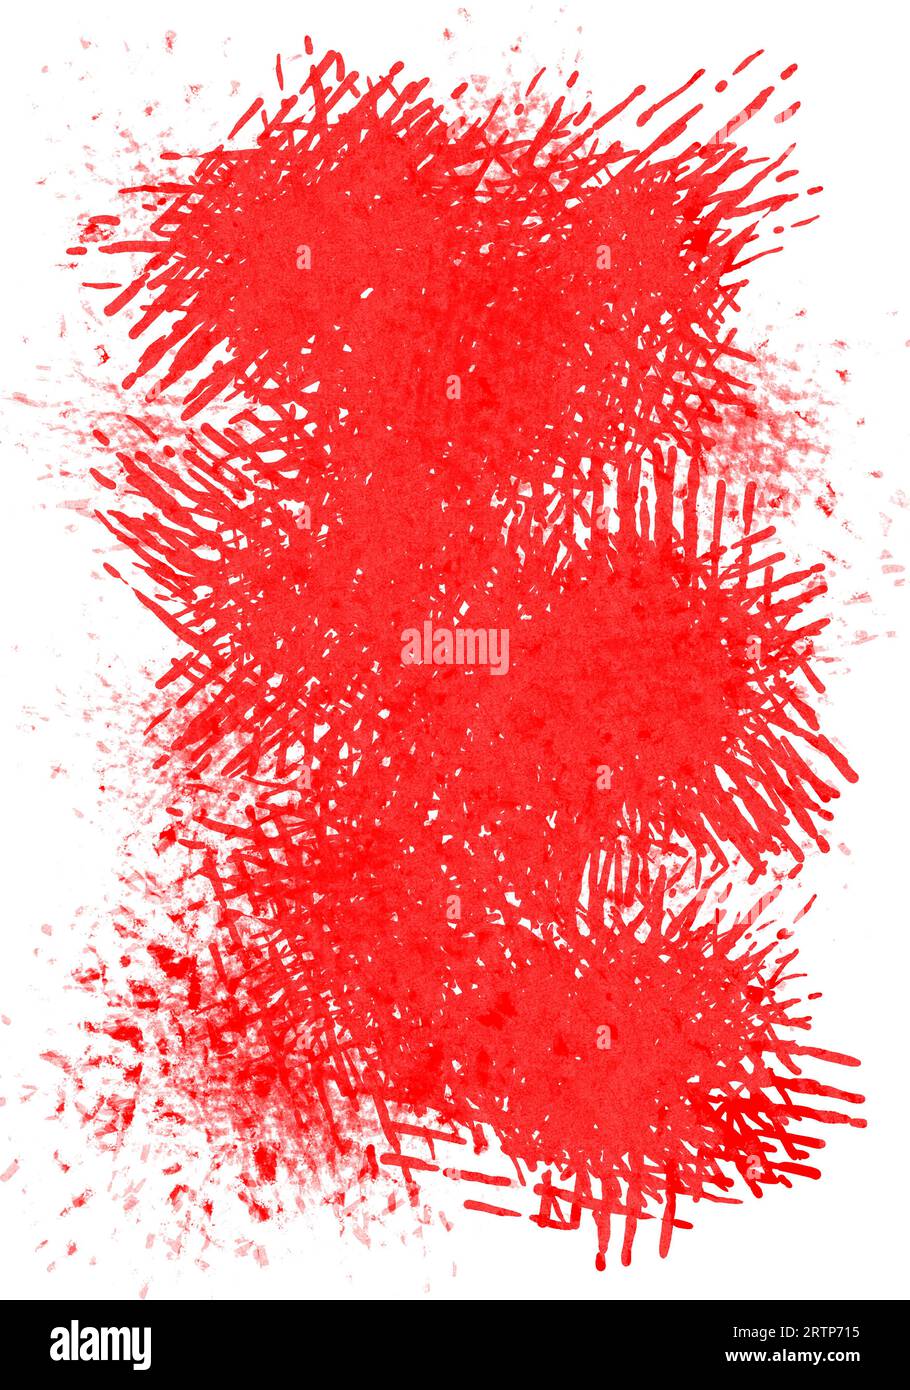 Red Abstract Grunge texture art, fonds d'écran rouge Illustrator texture art Banque D'Images